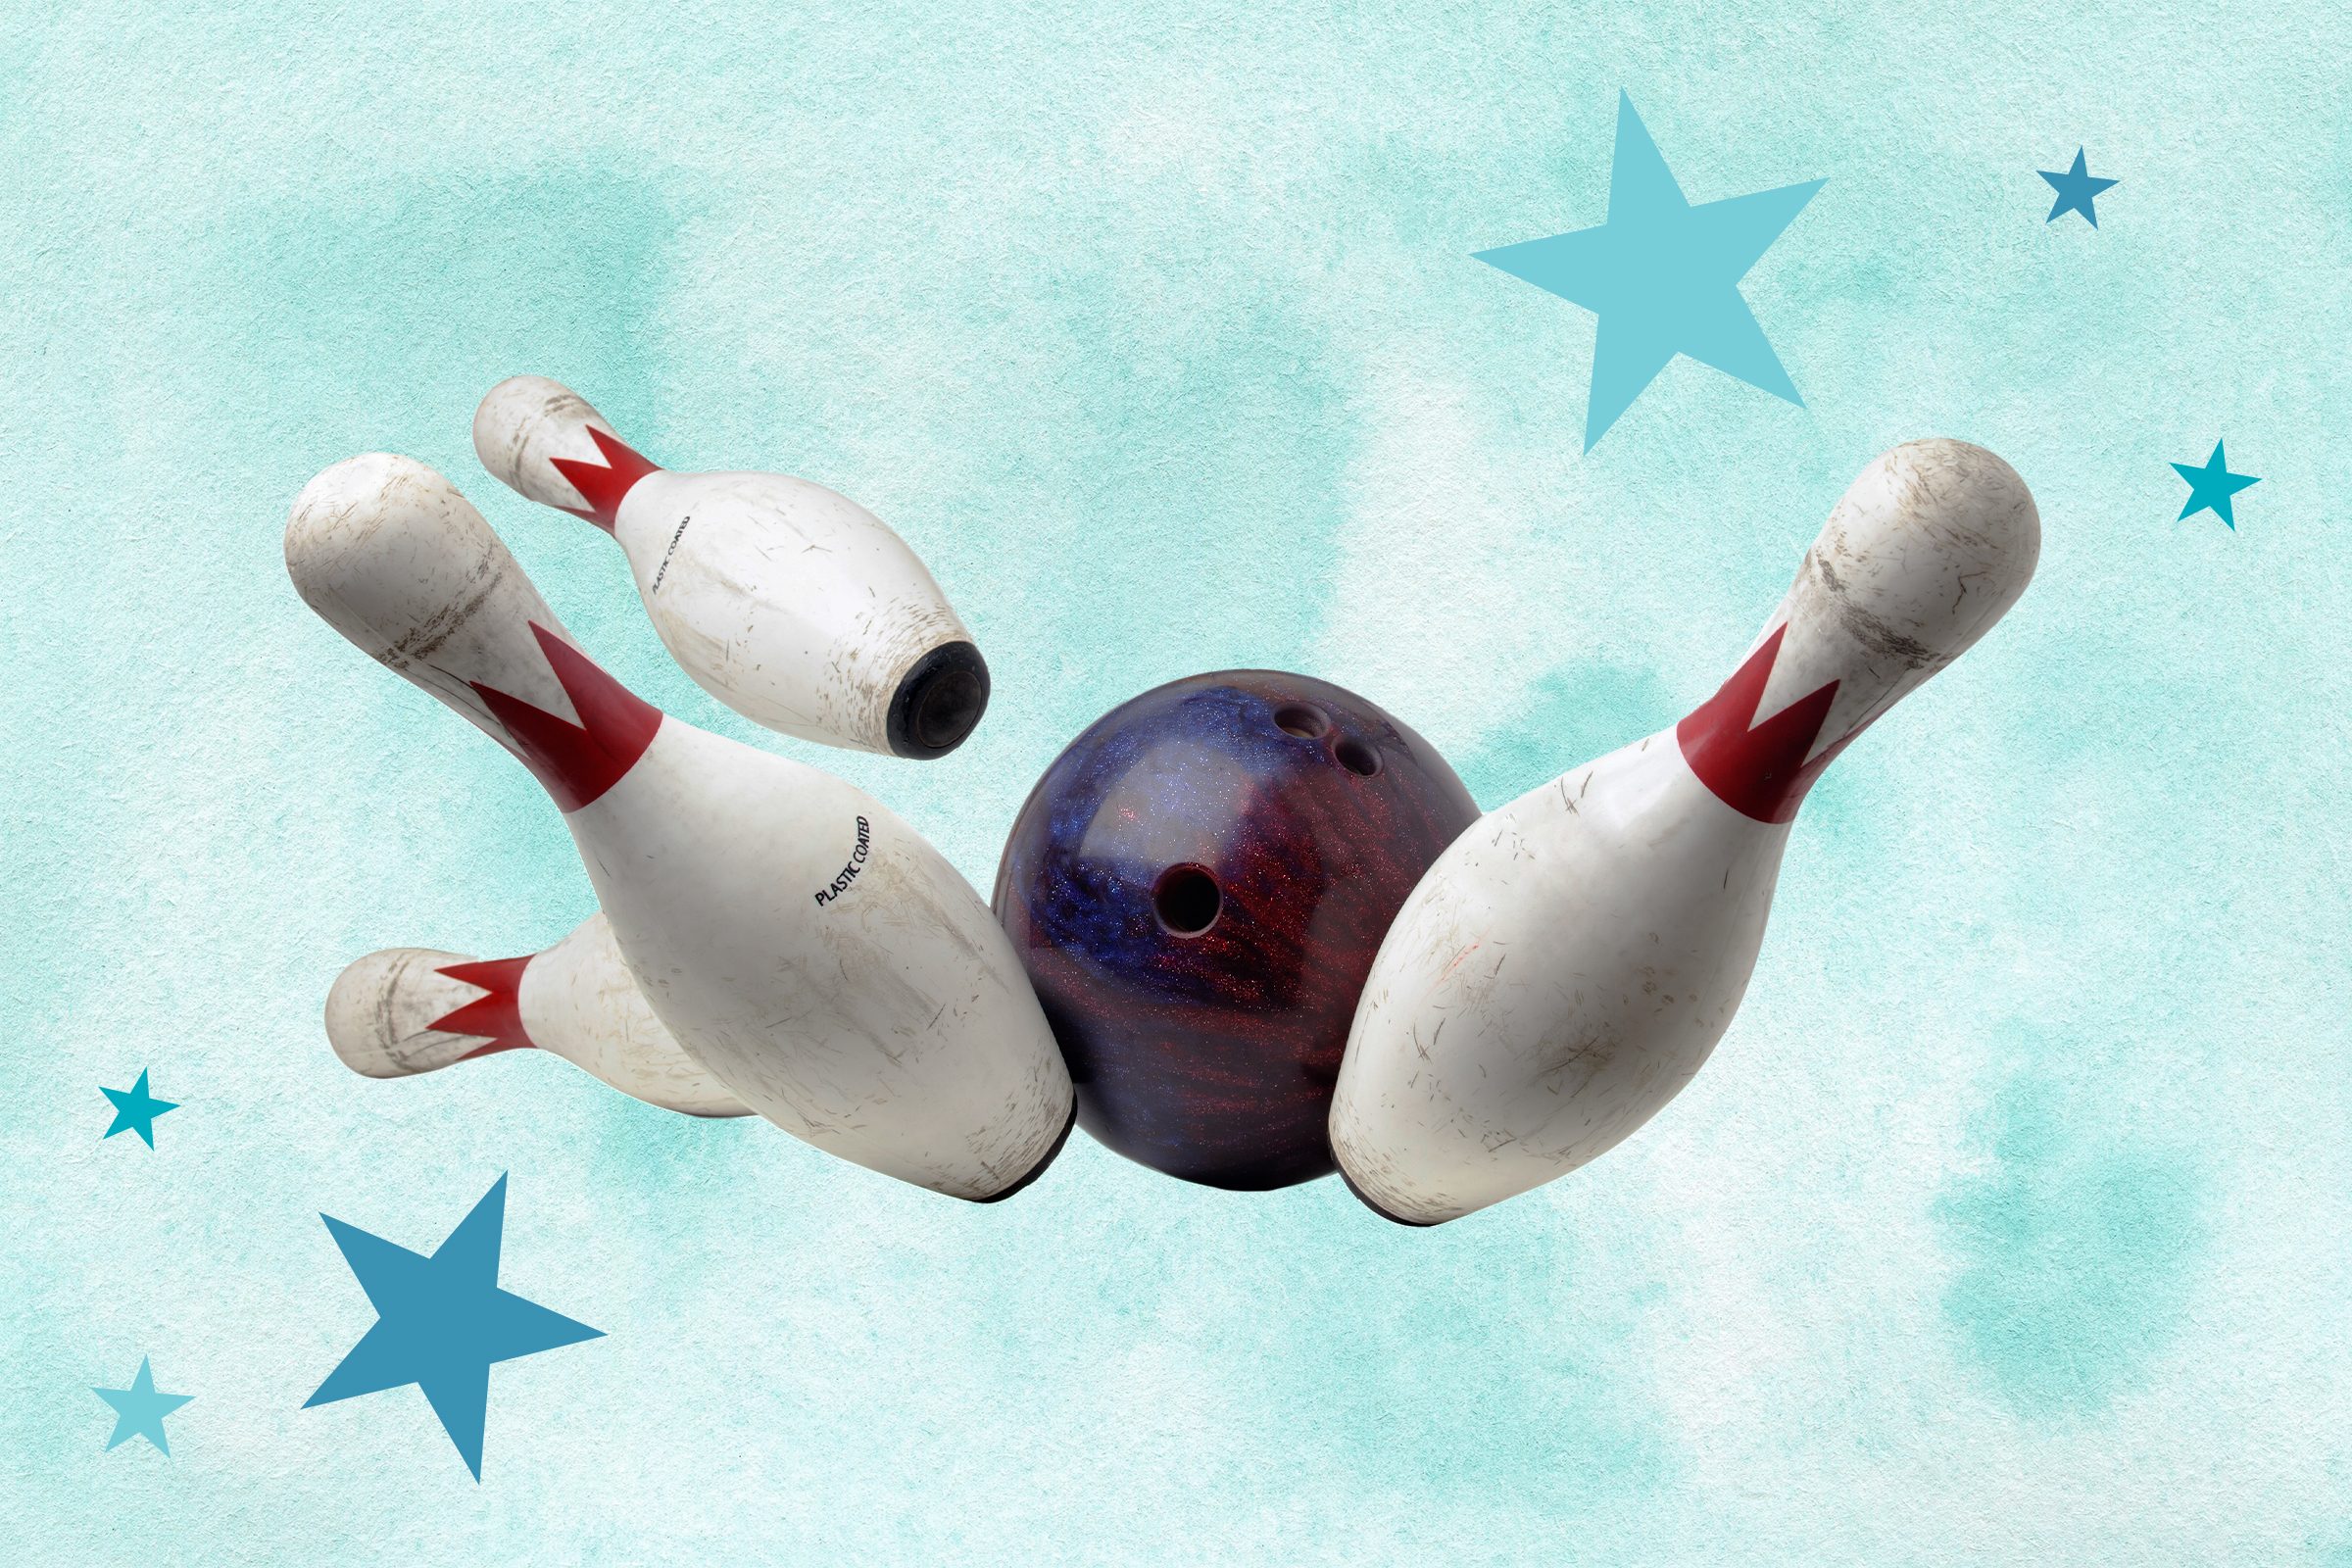 Bowling ball knocking into four bowling pins